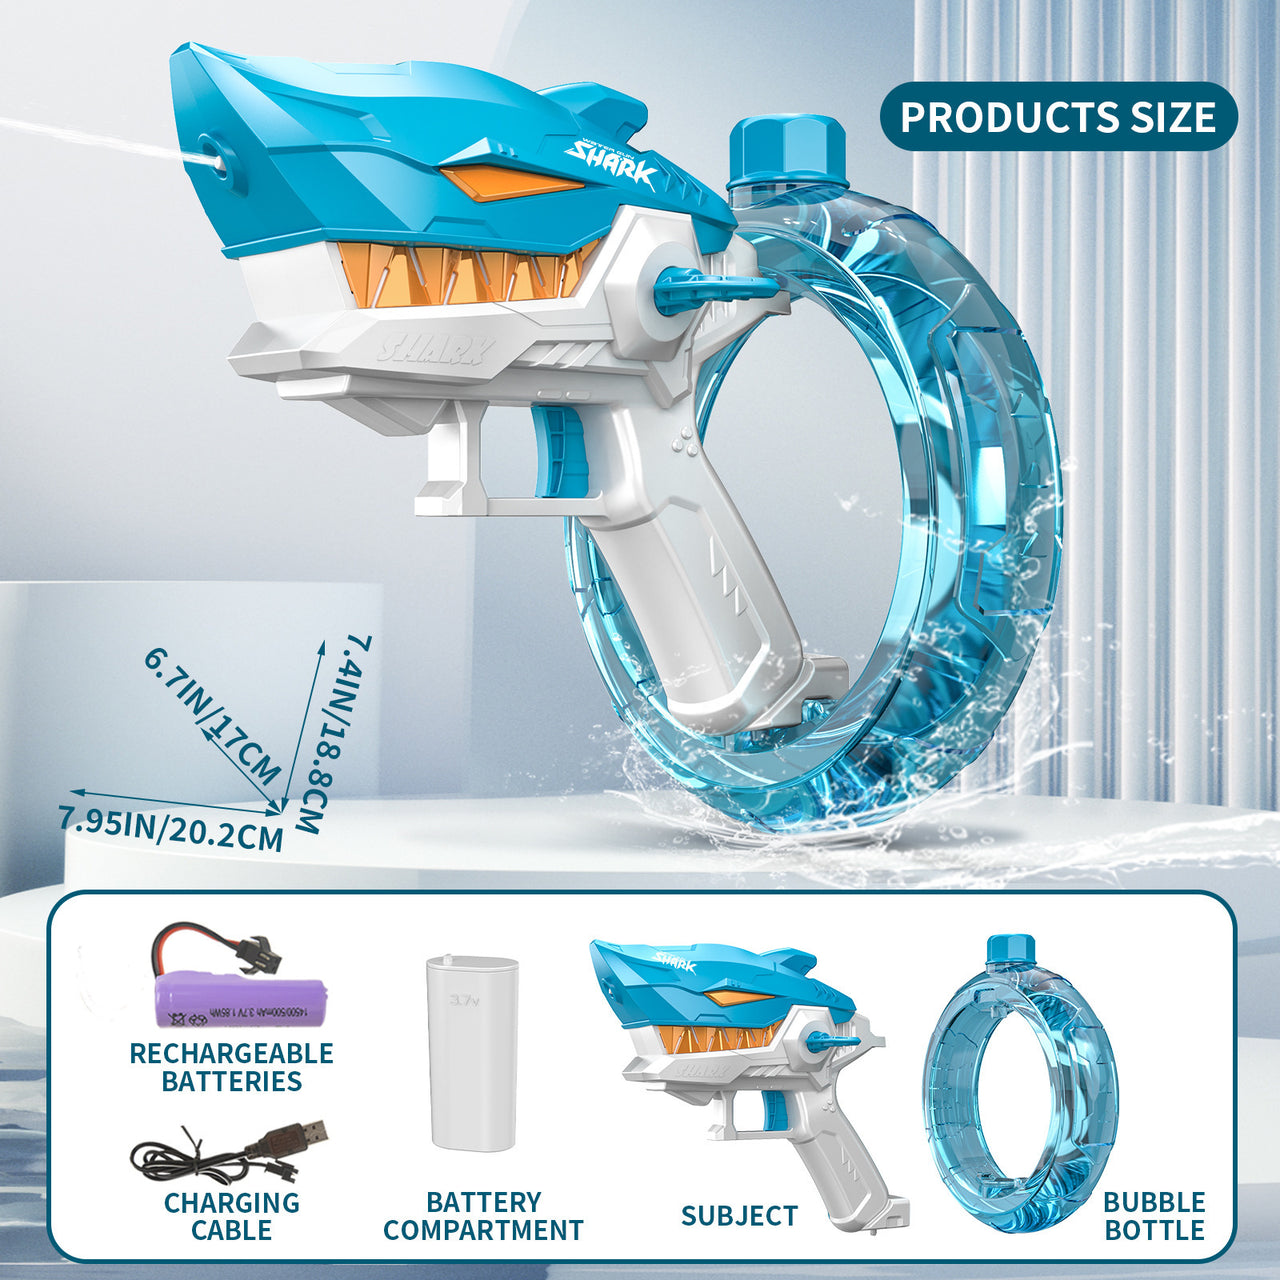 Shark Electric Water Gun Toy